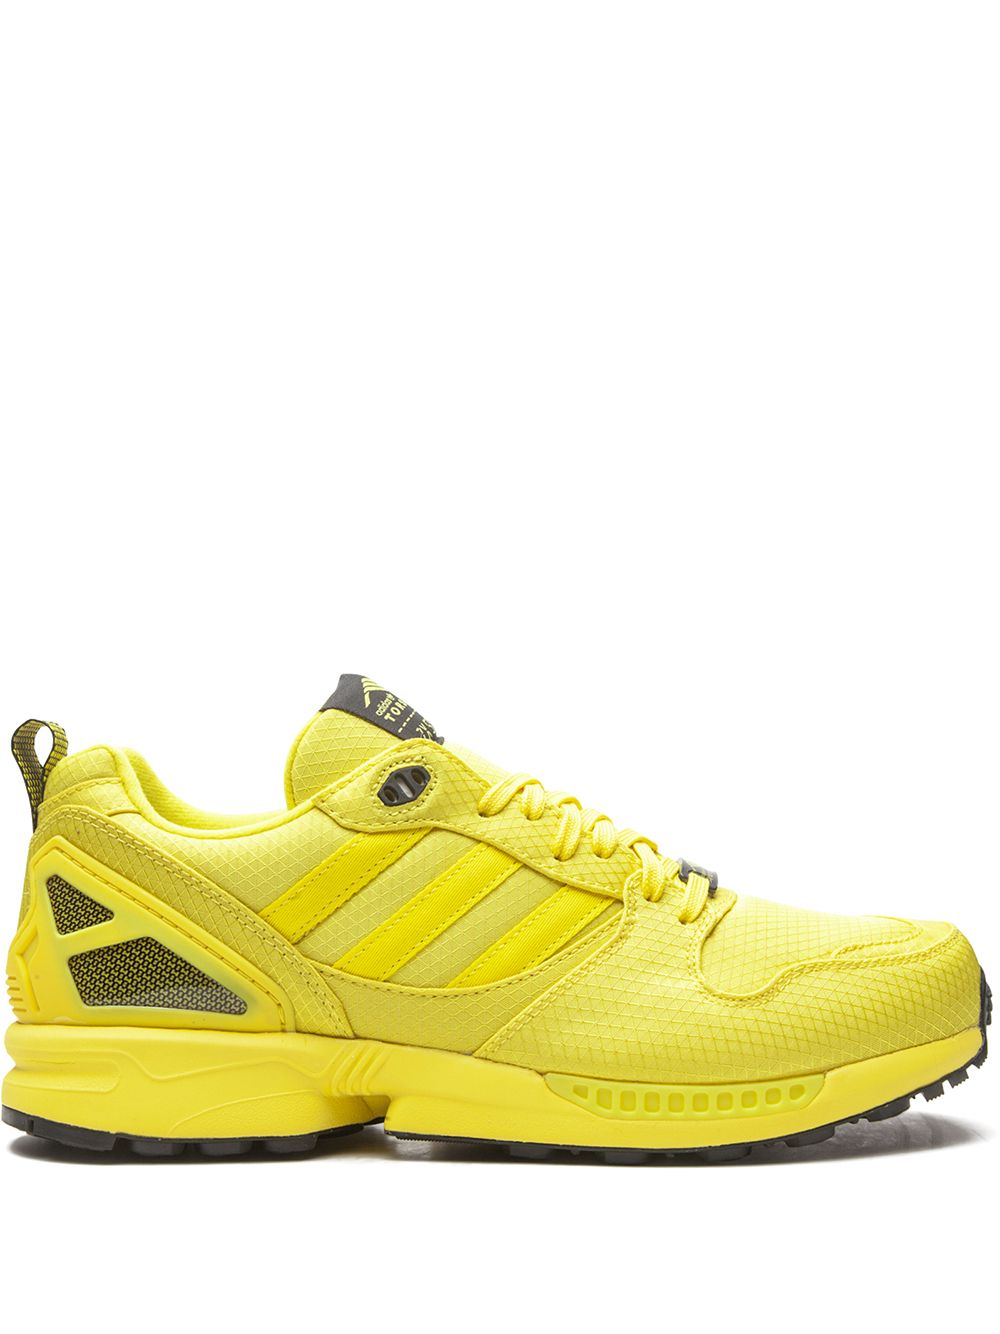 adidas ZX 5000 Torsion sneakers - Yellow von adidas